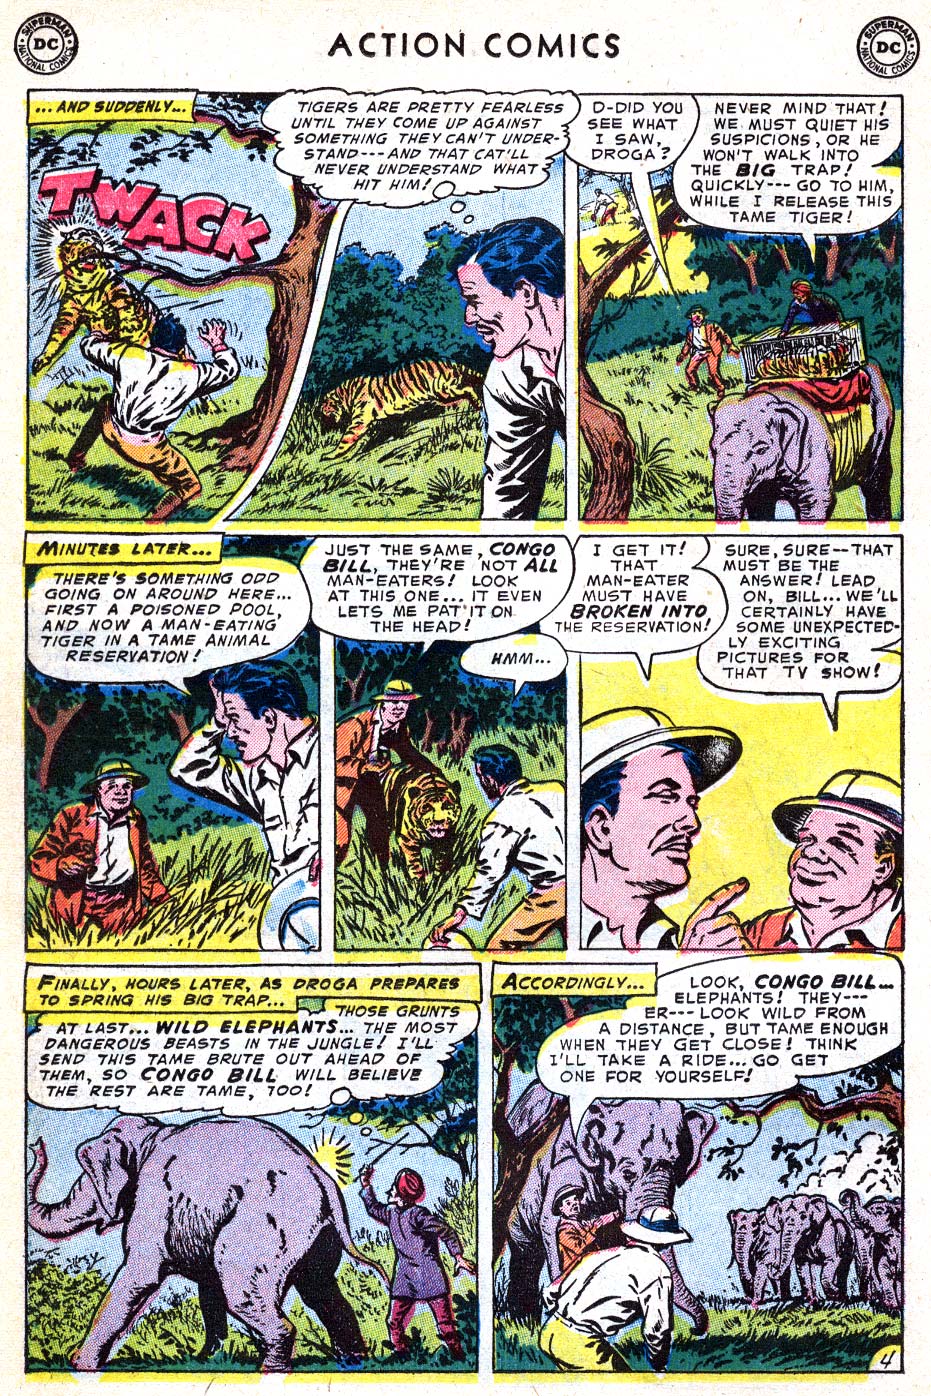 Action Comics (1938) 182 Page 19